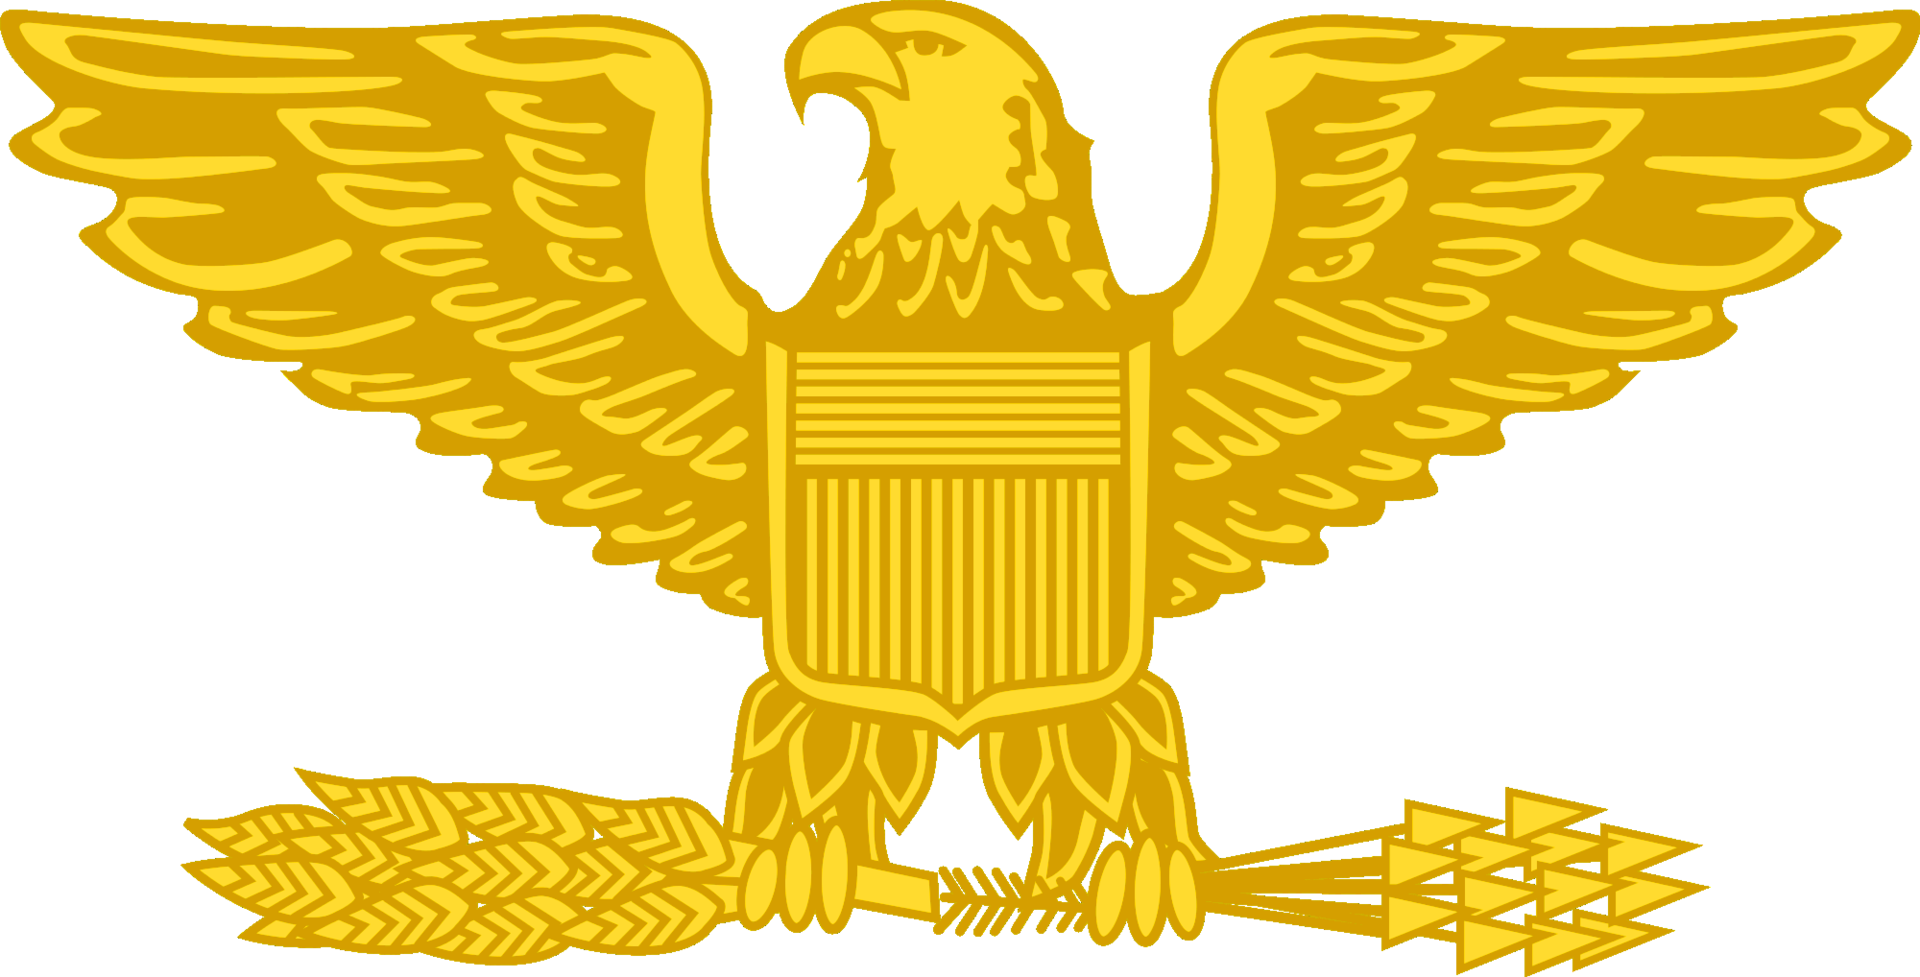 American Gold Eagle Wikipedia